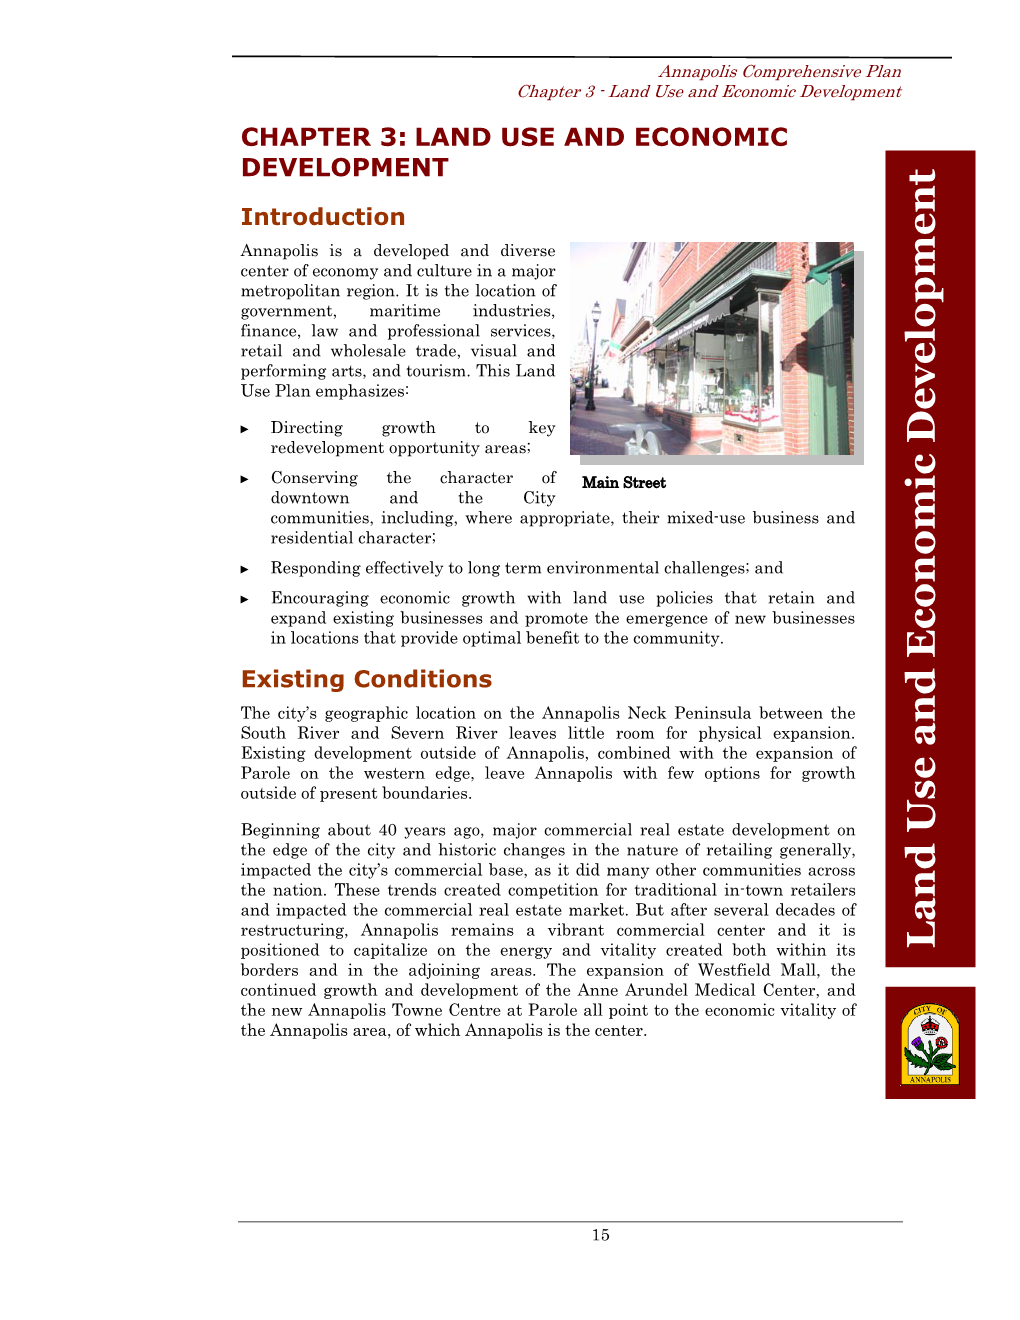 Chapter 3: Land Use and Economic Development